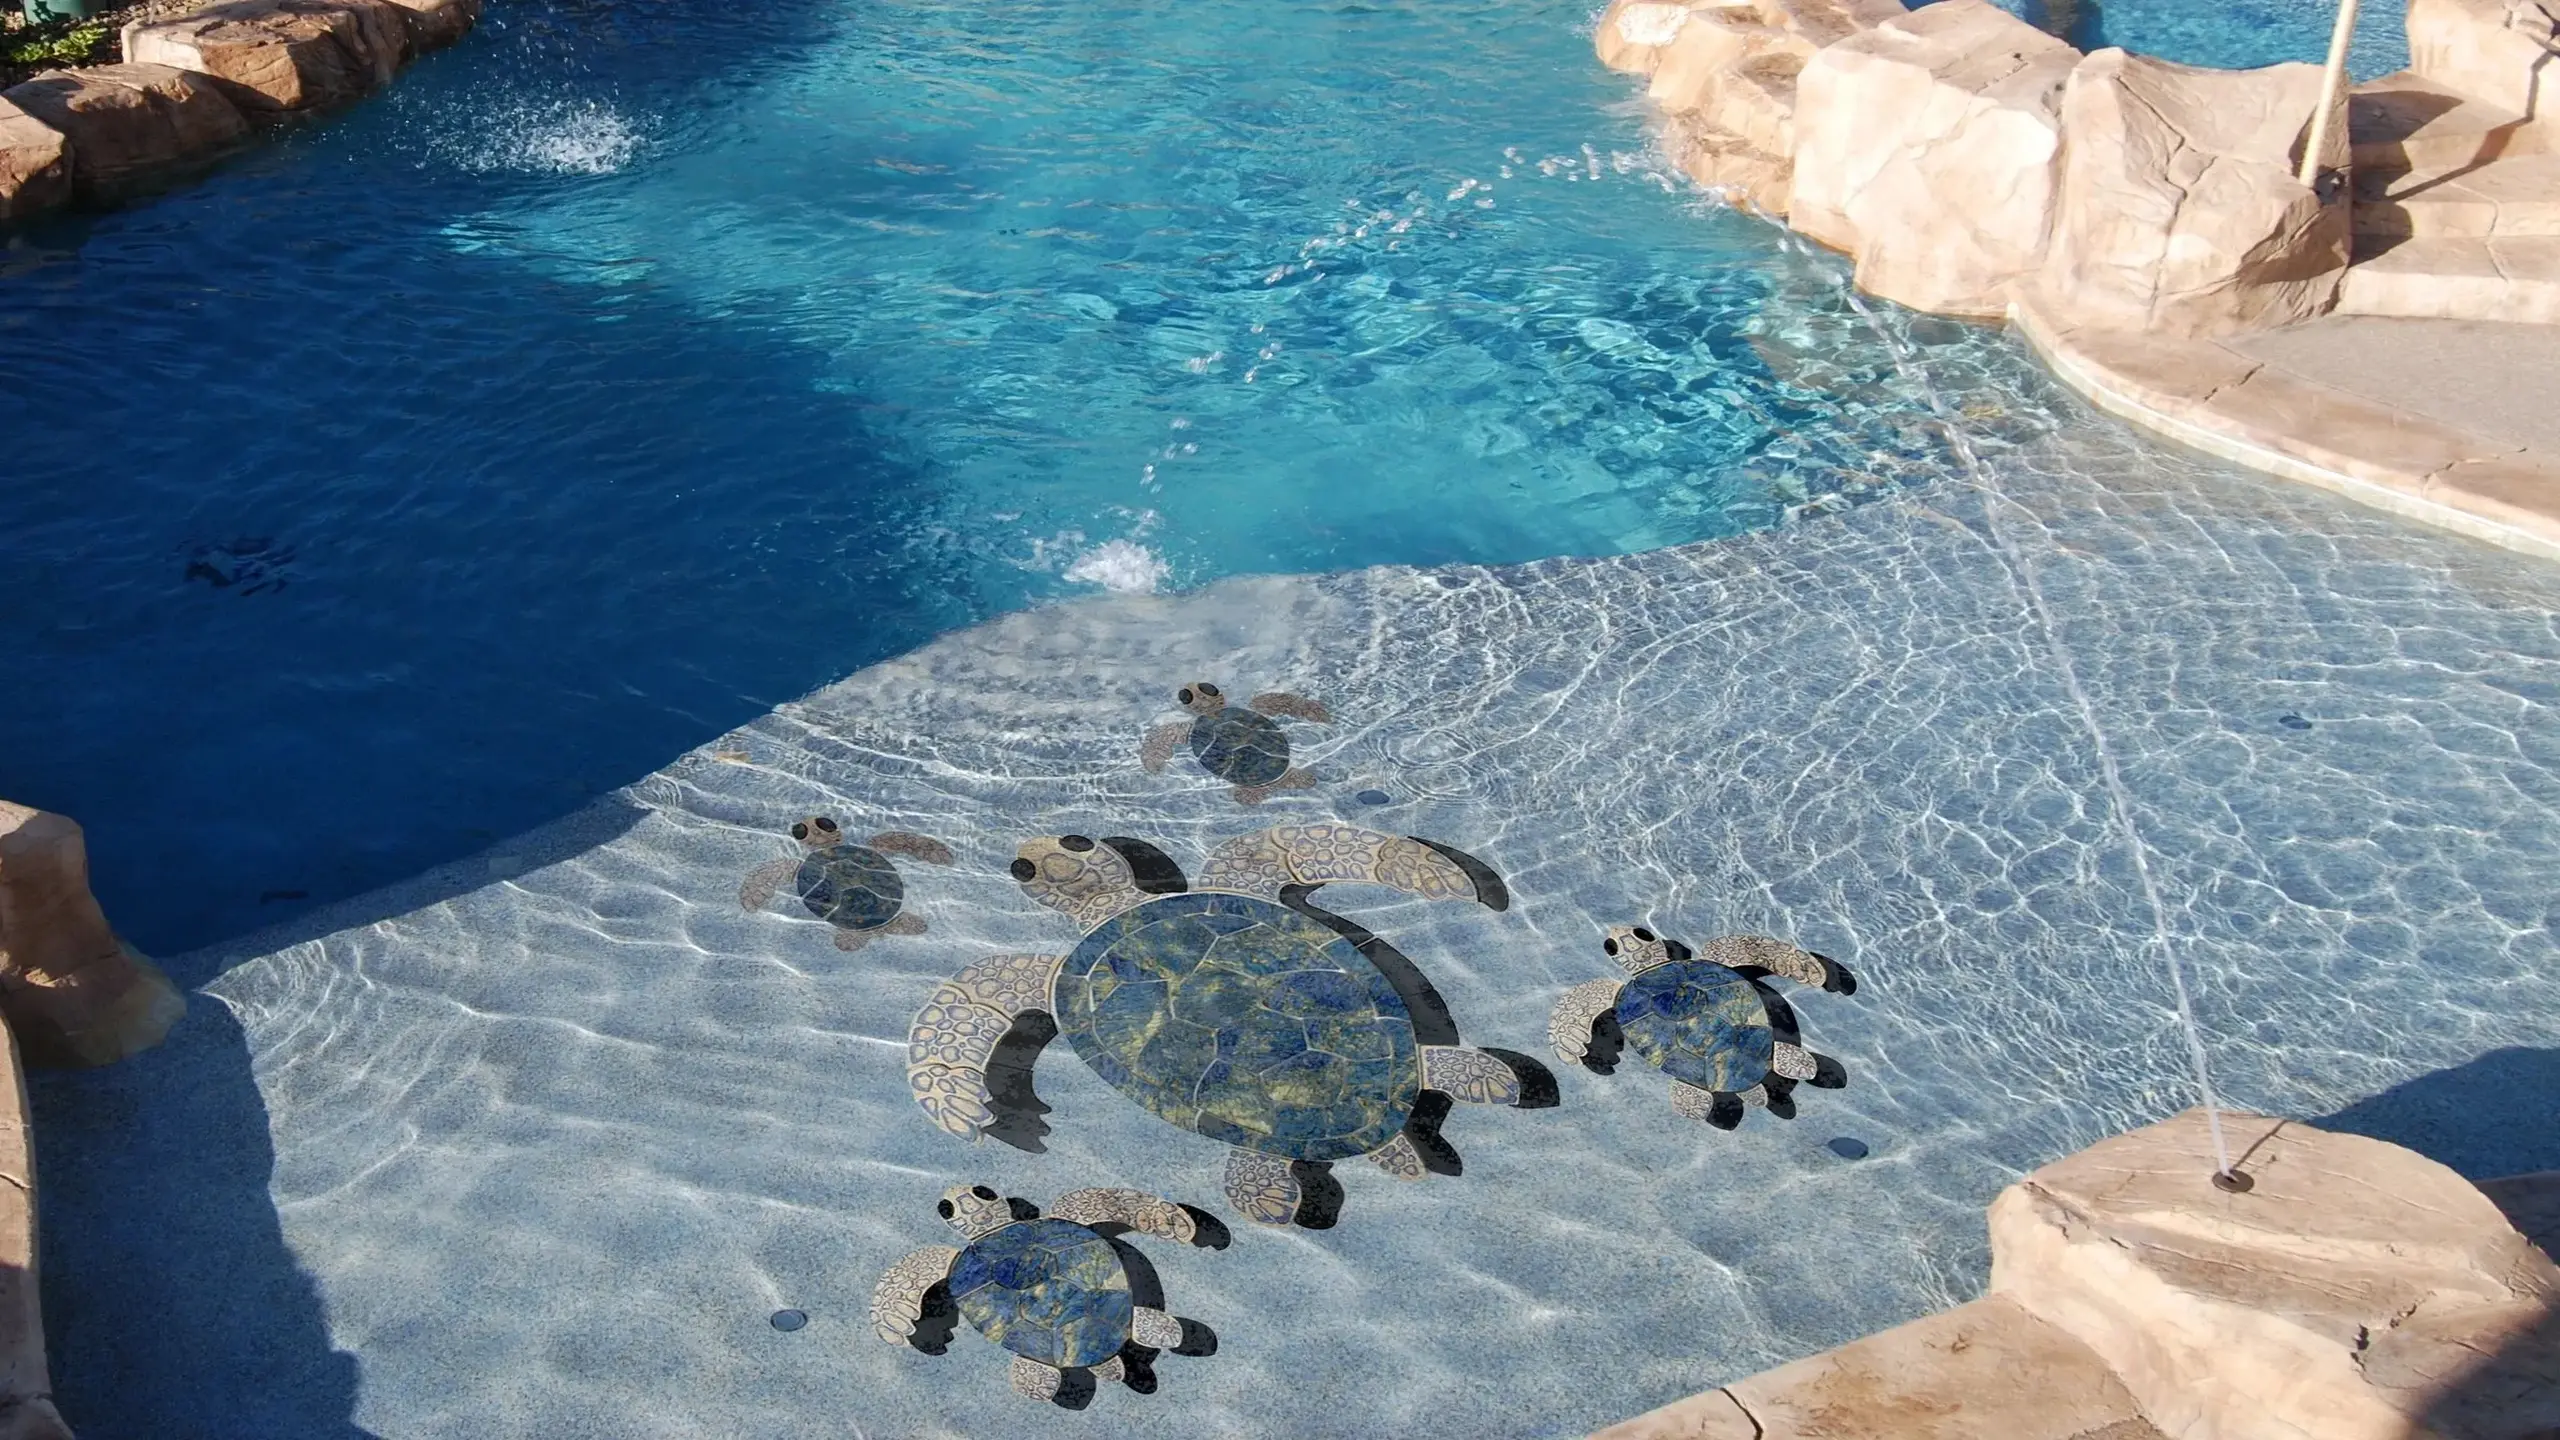 Turtle-Family-In-Pool-April-2020-Cropp-1227ba4 (1)